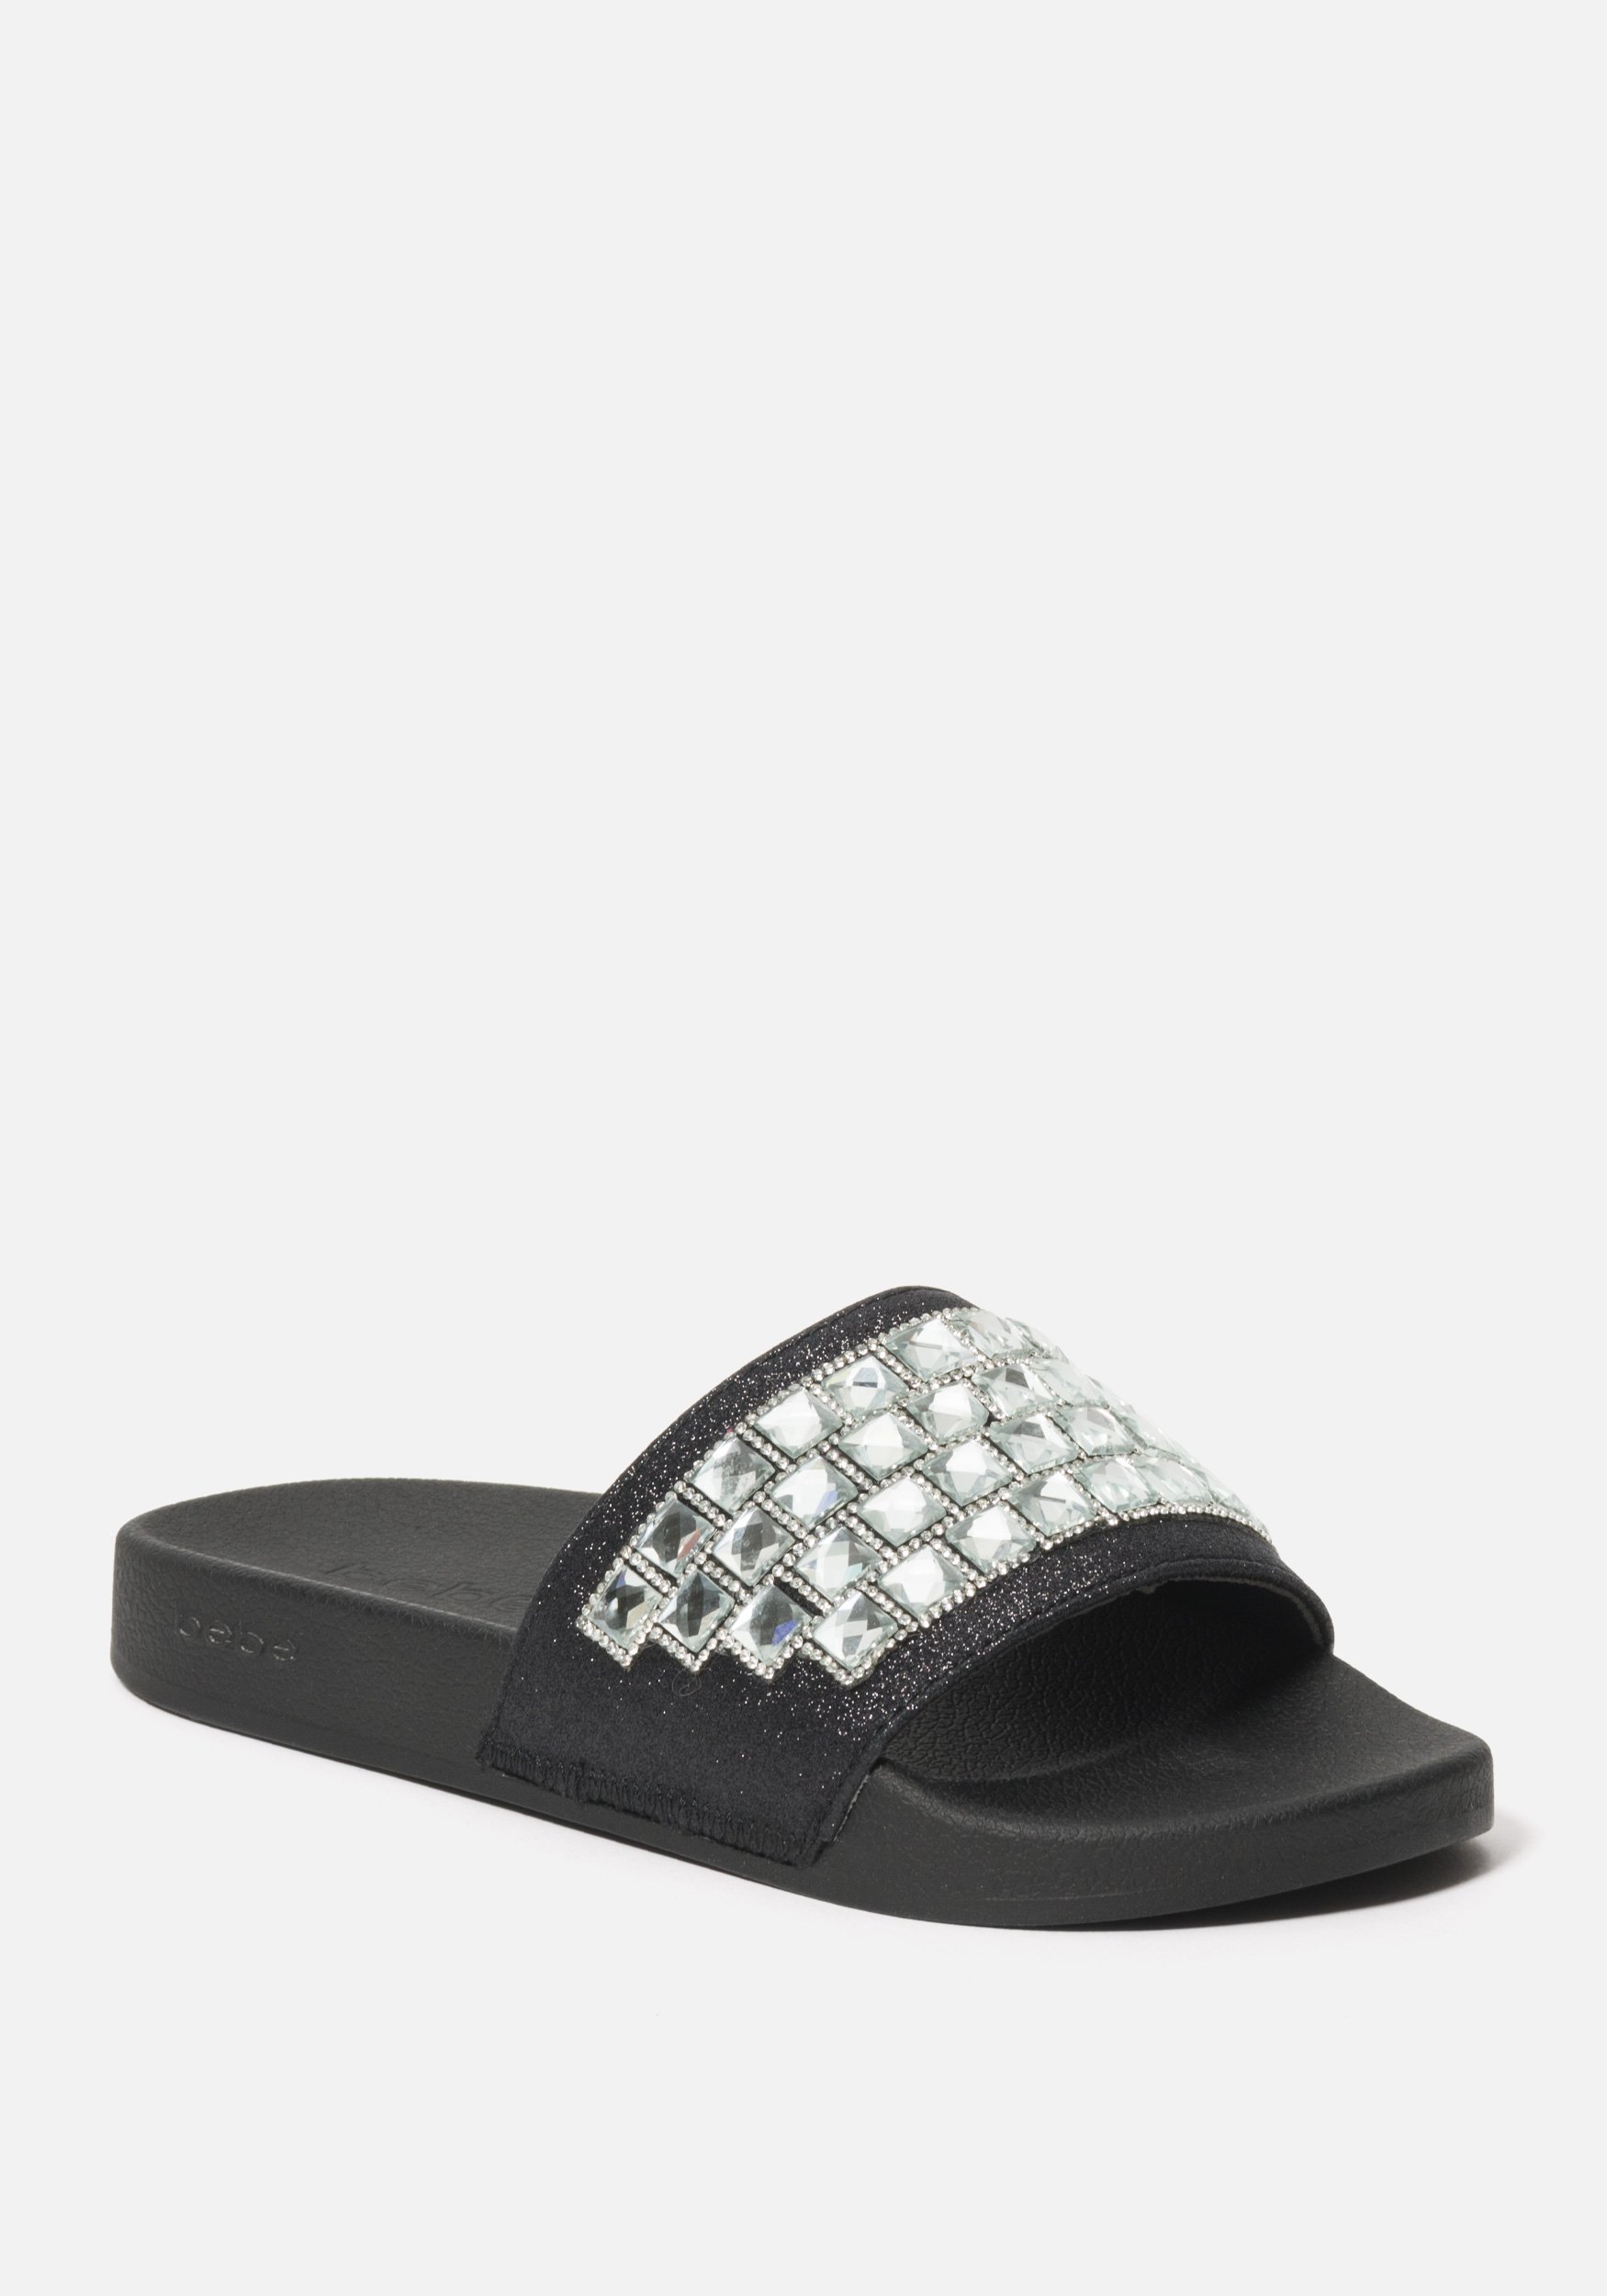 Bebe Women's Flashie Metallic Slides Shoe, Size 11 in BLACK Synthetic